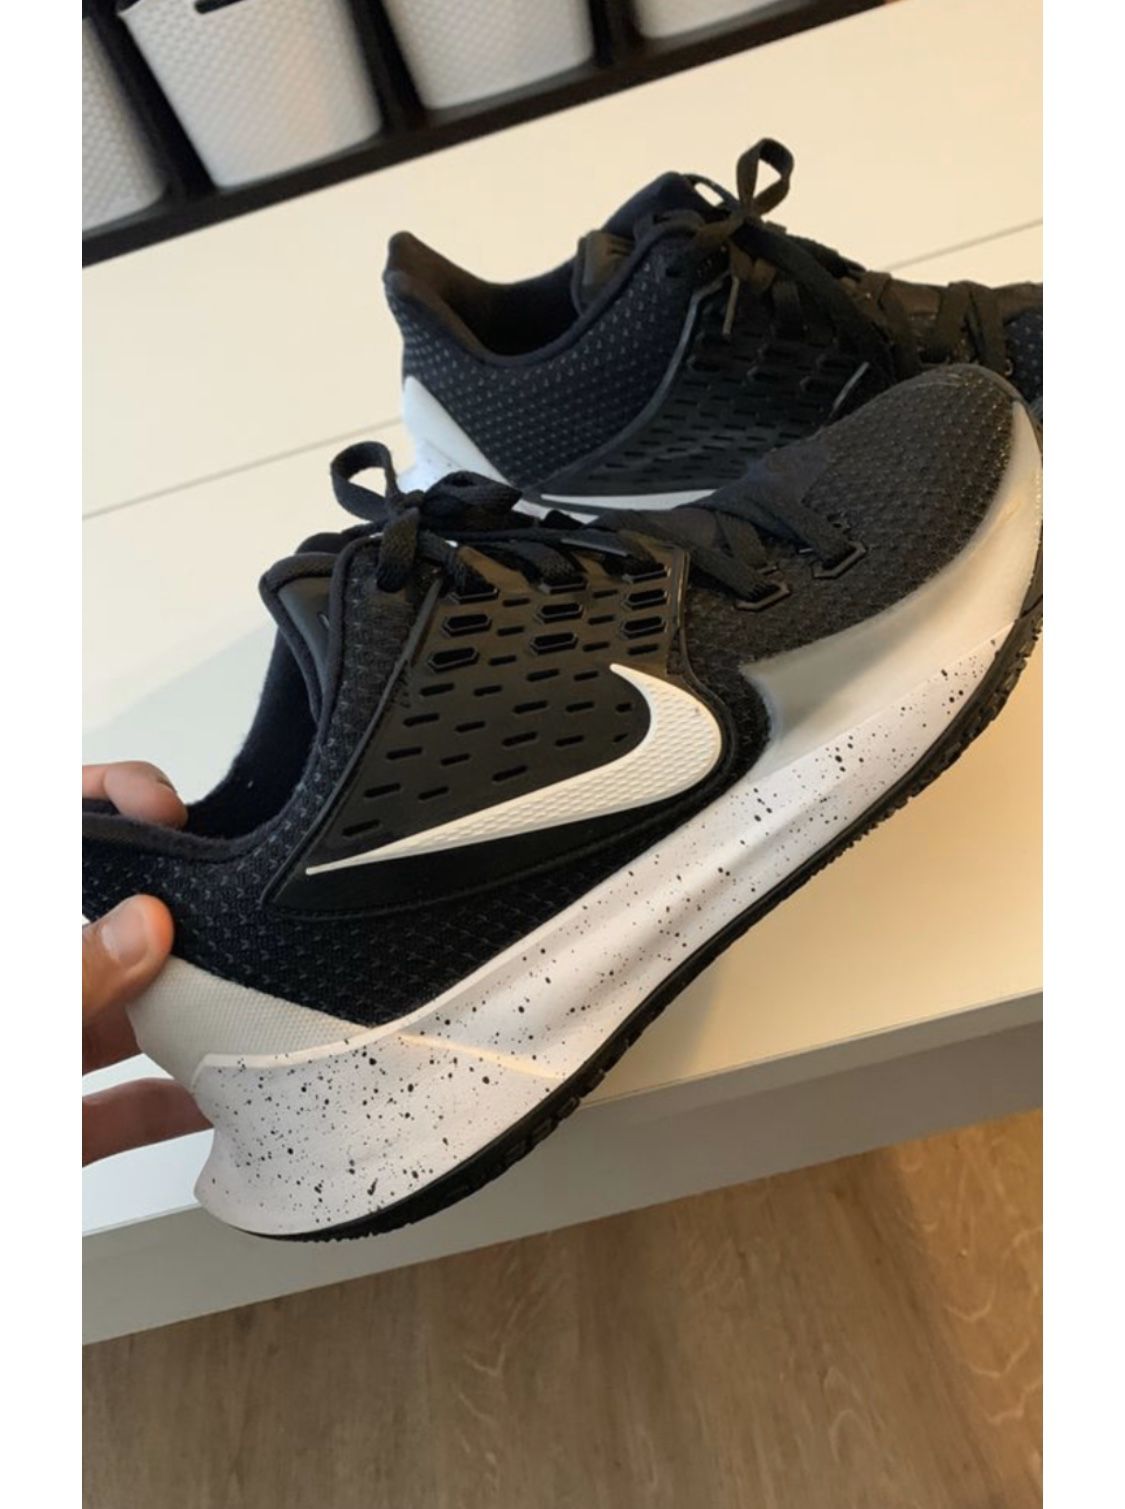 Kyrie Low 2 Nike’s